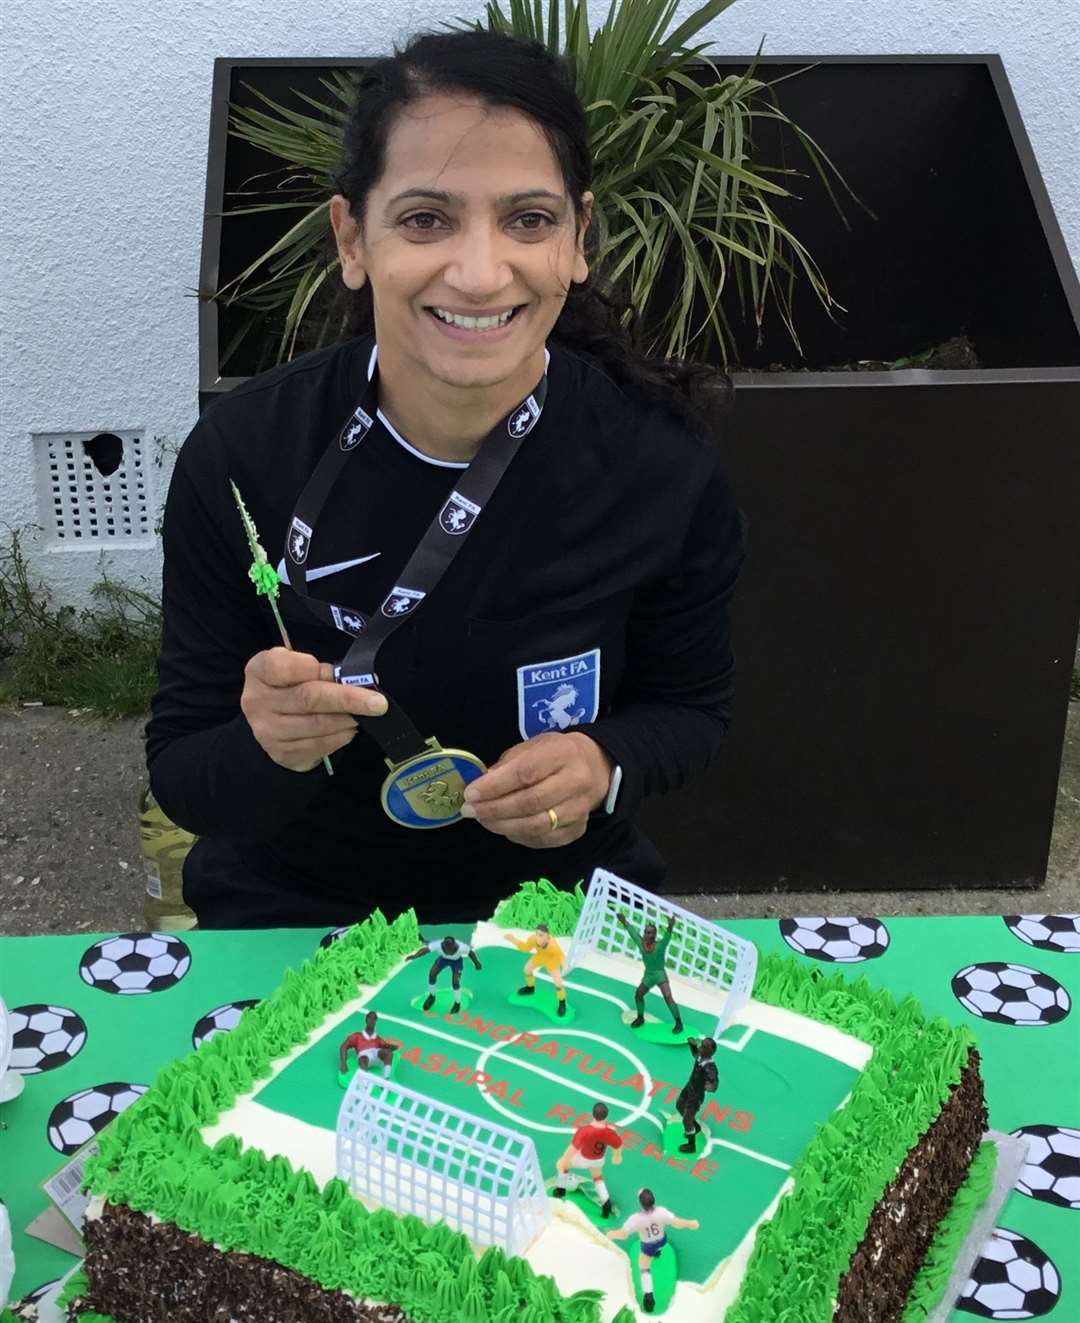 Rashpal recently celebrated making football history